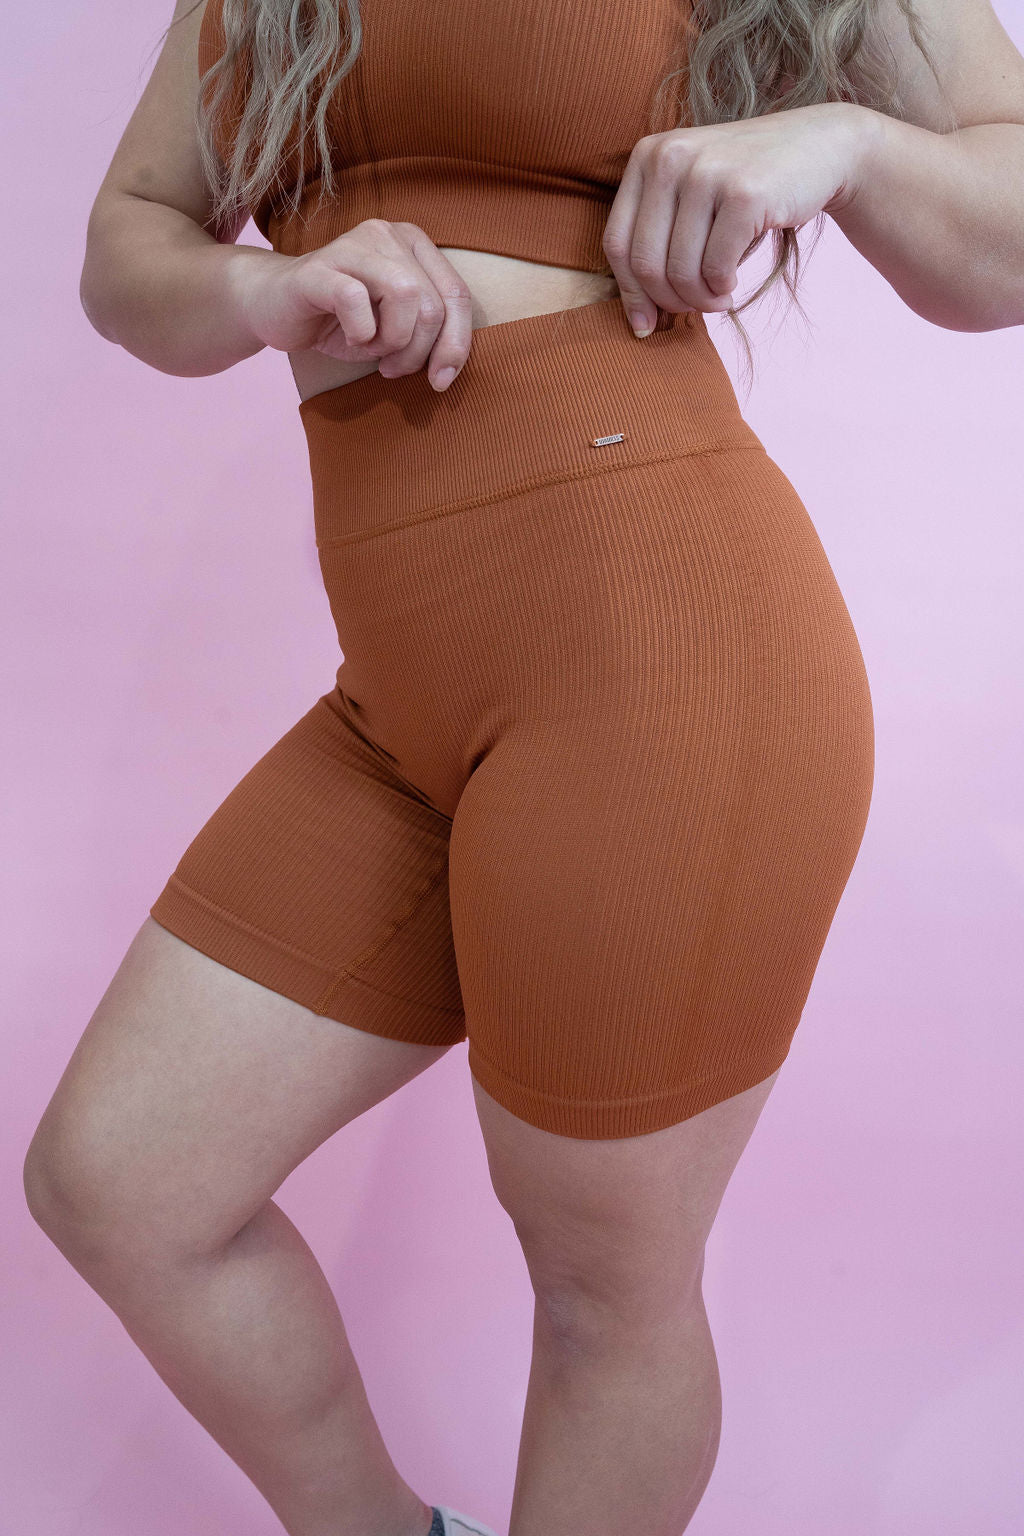 Quaddess fitness apparel for women